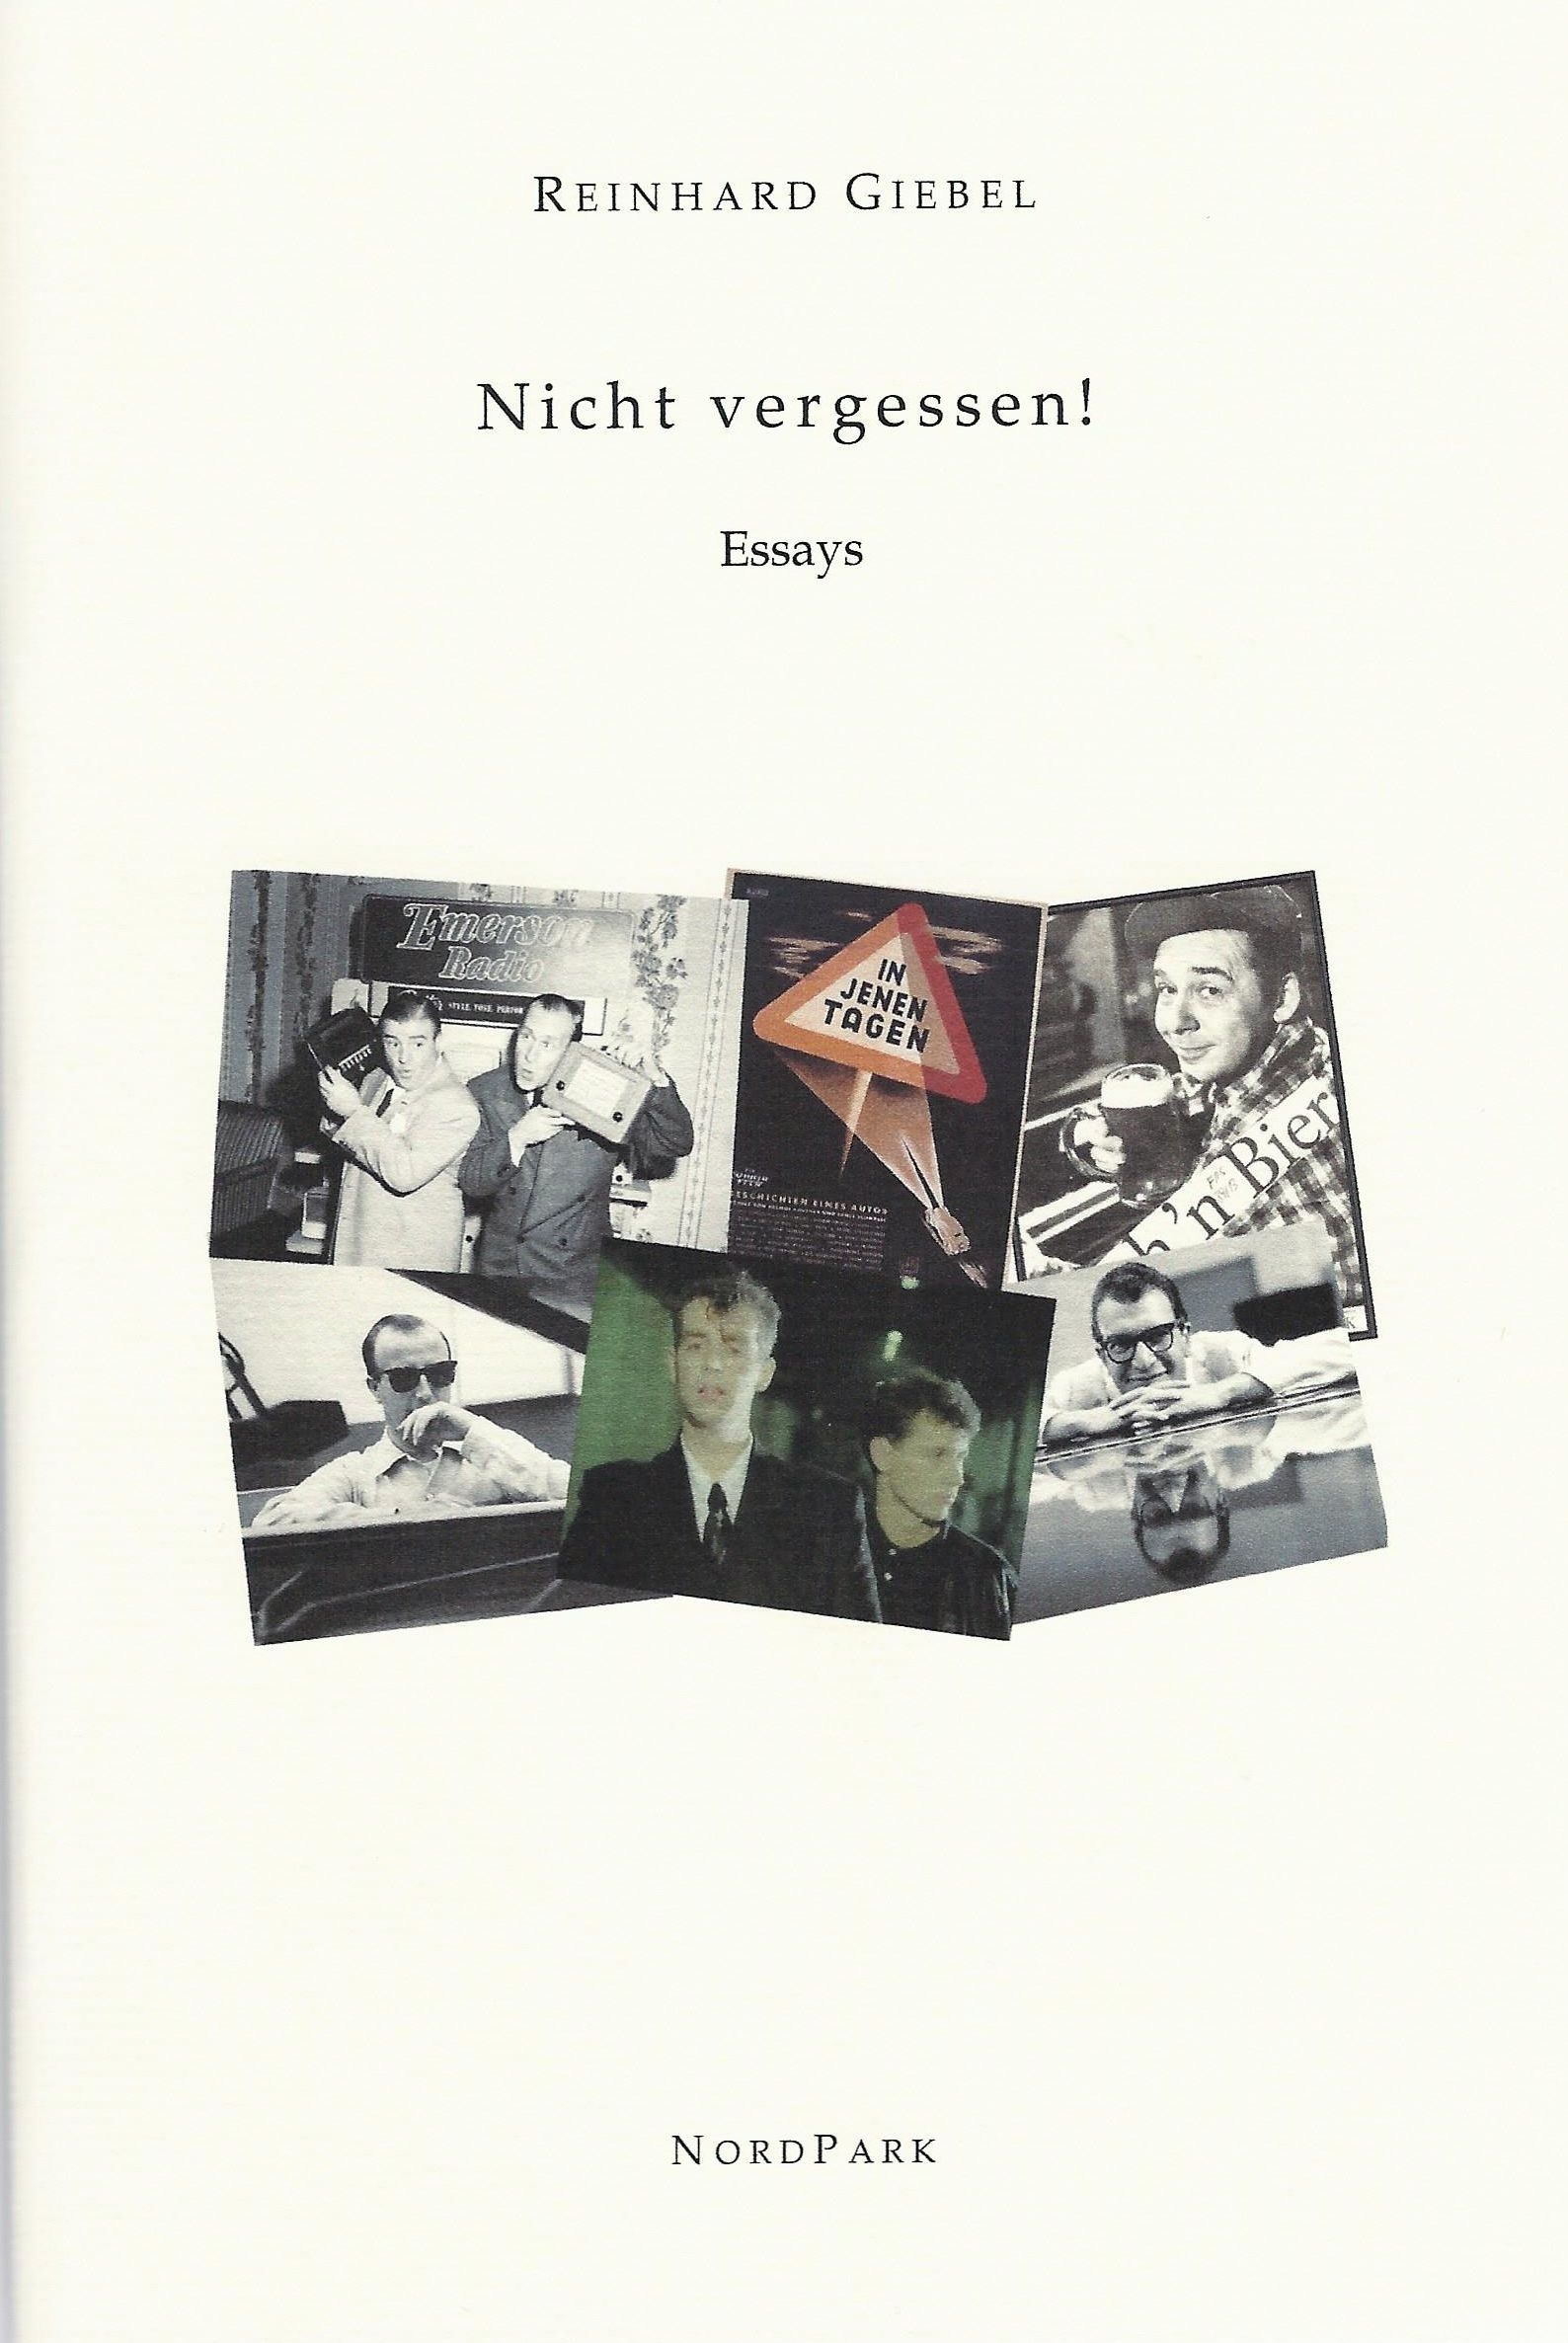 Die Besonderen Hefte: giebel-essays-cover.jpg